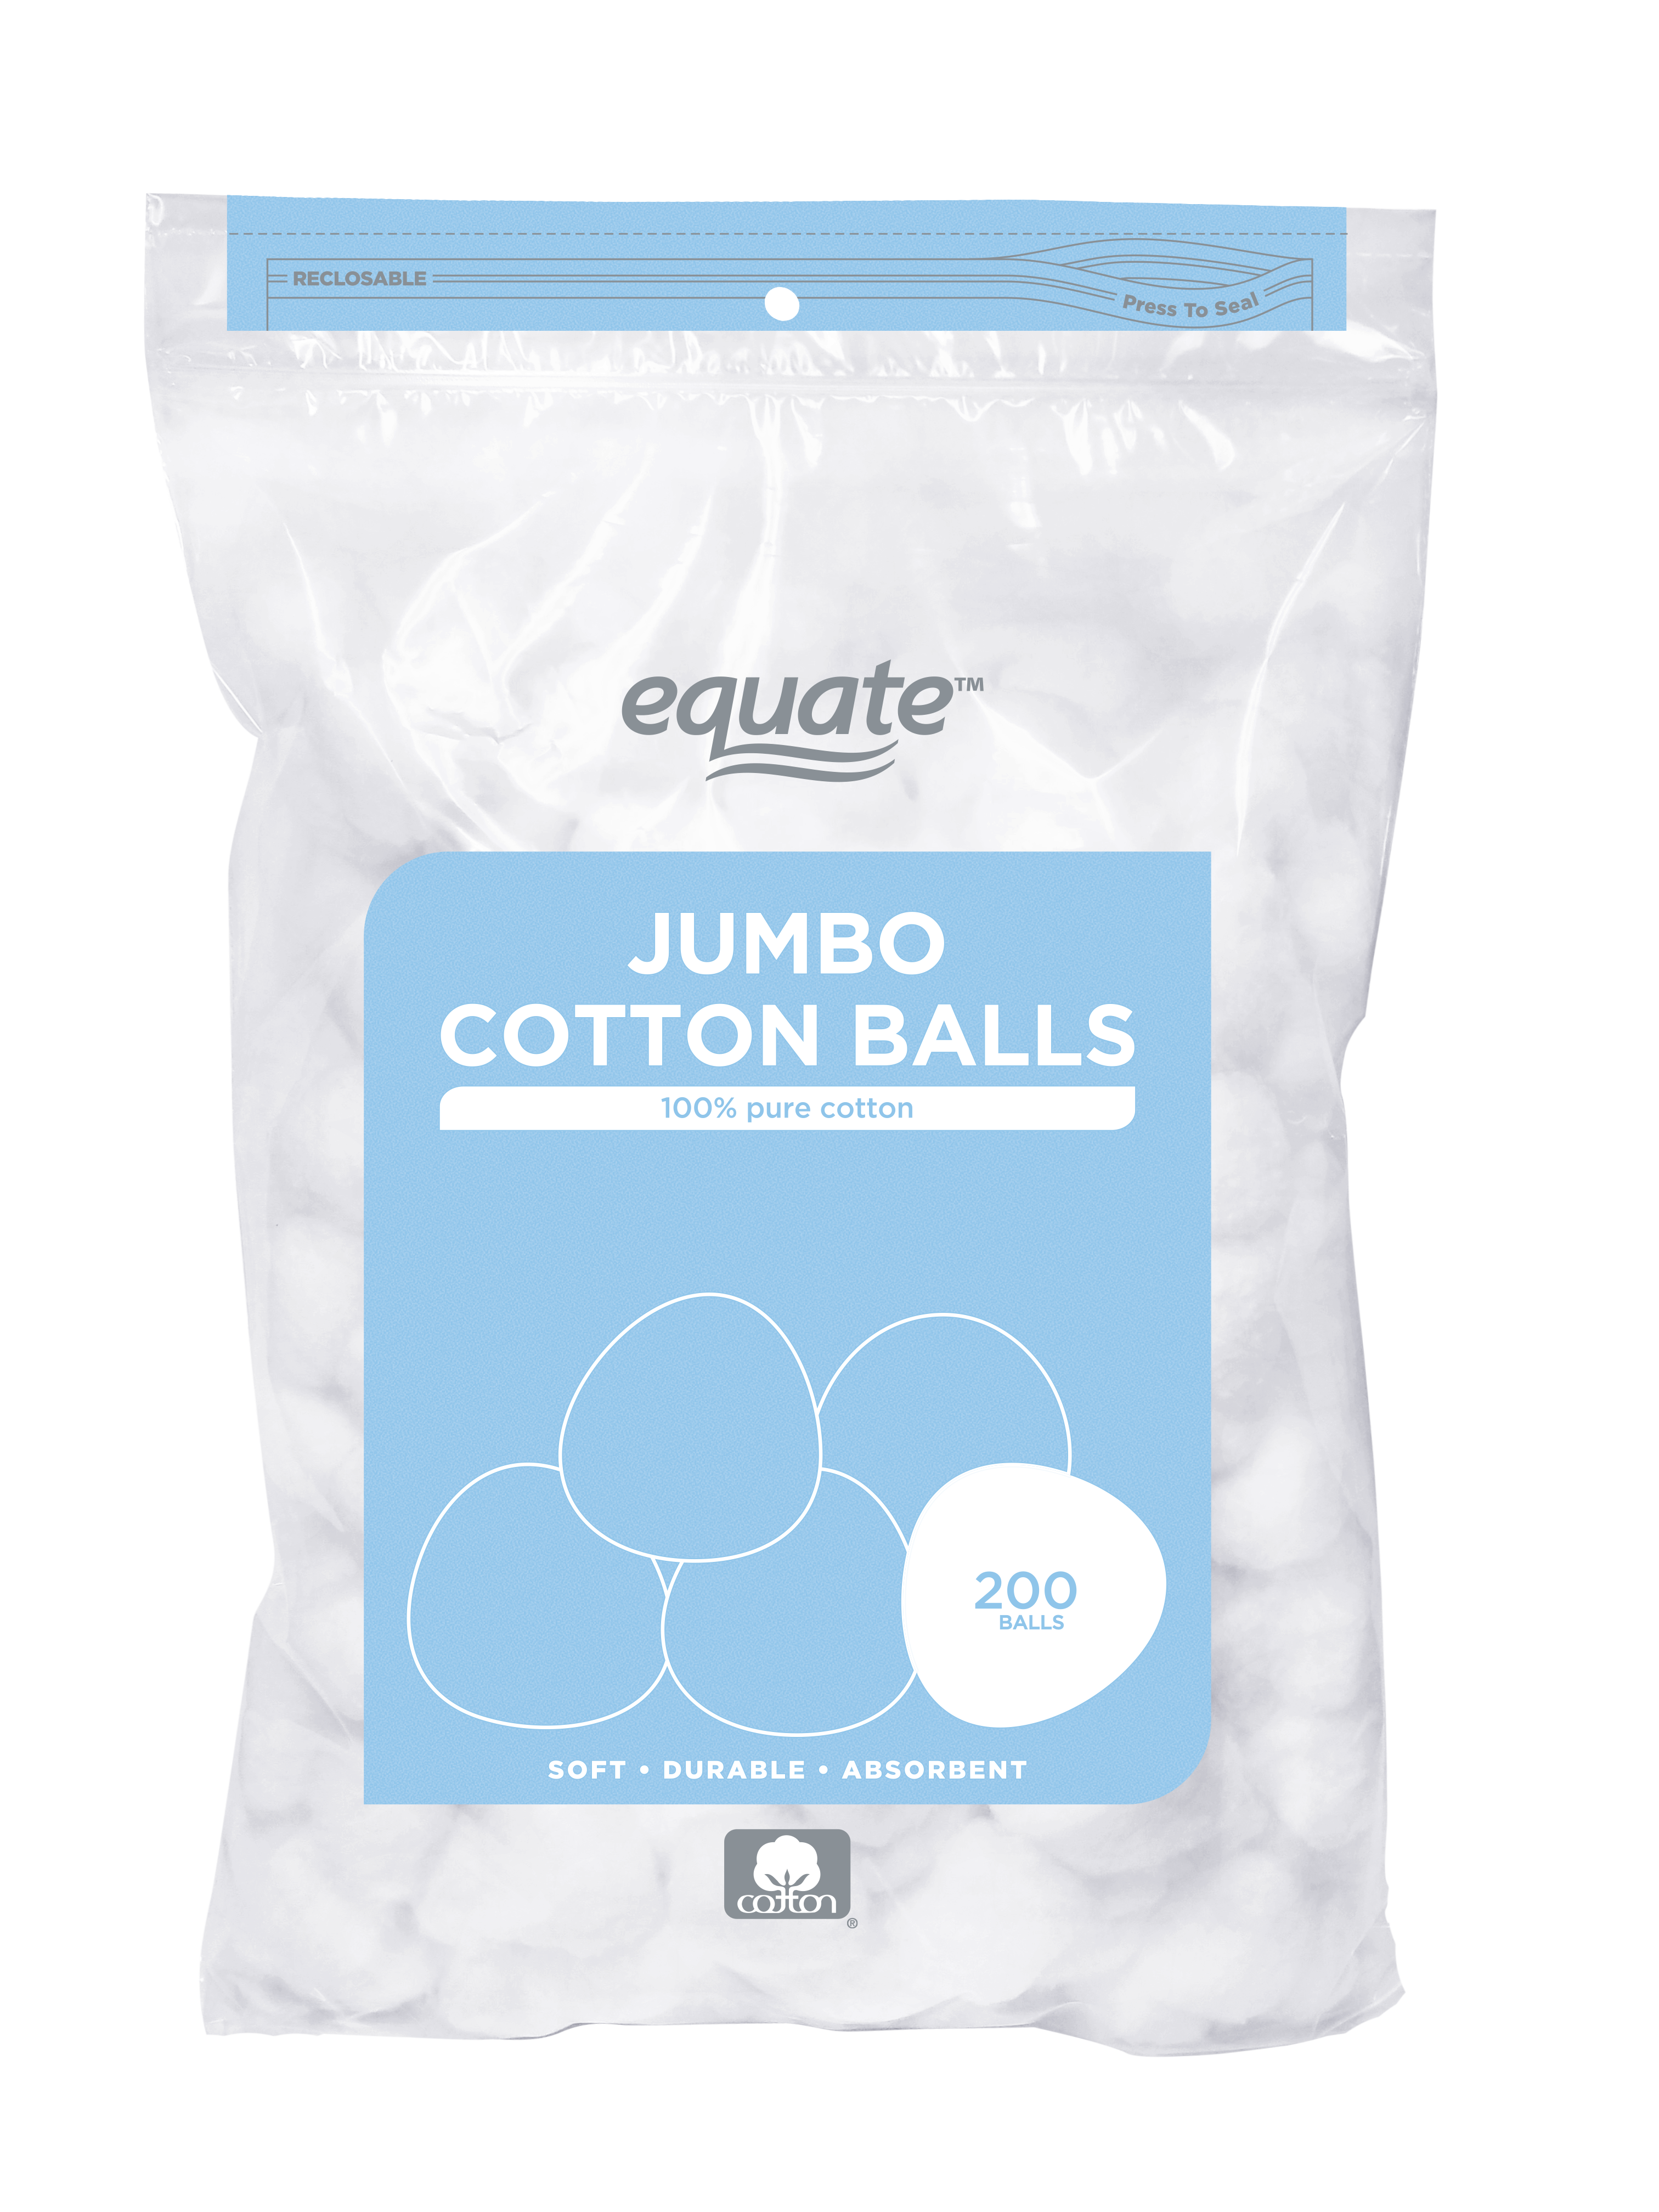 Equate Beauty Jumbo Cotton Balls, 200 Count - image 1 of 4